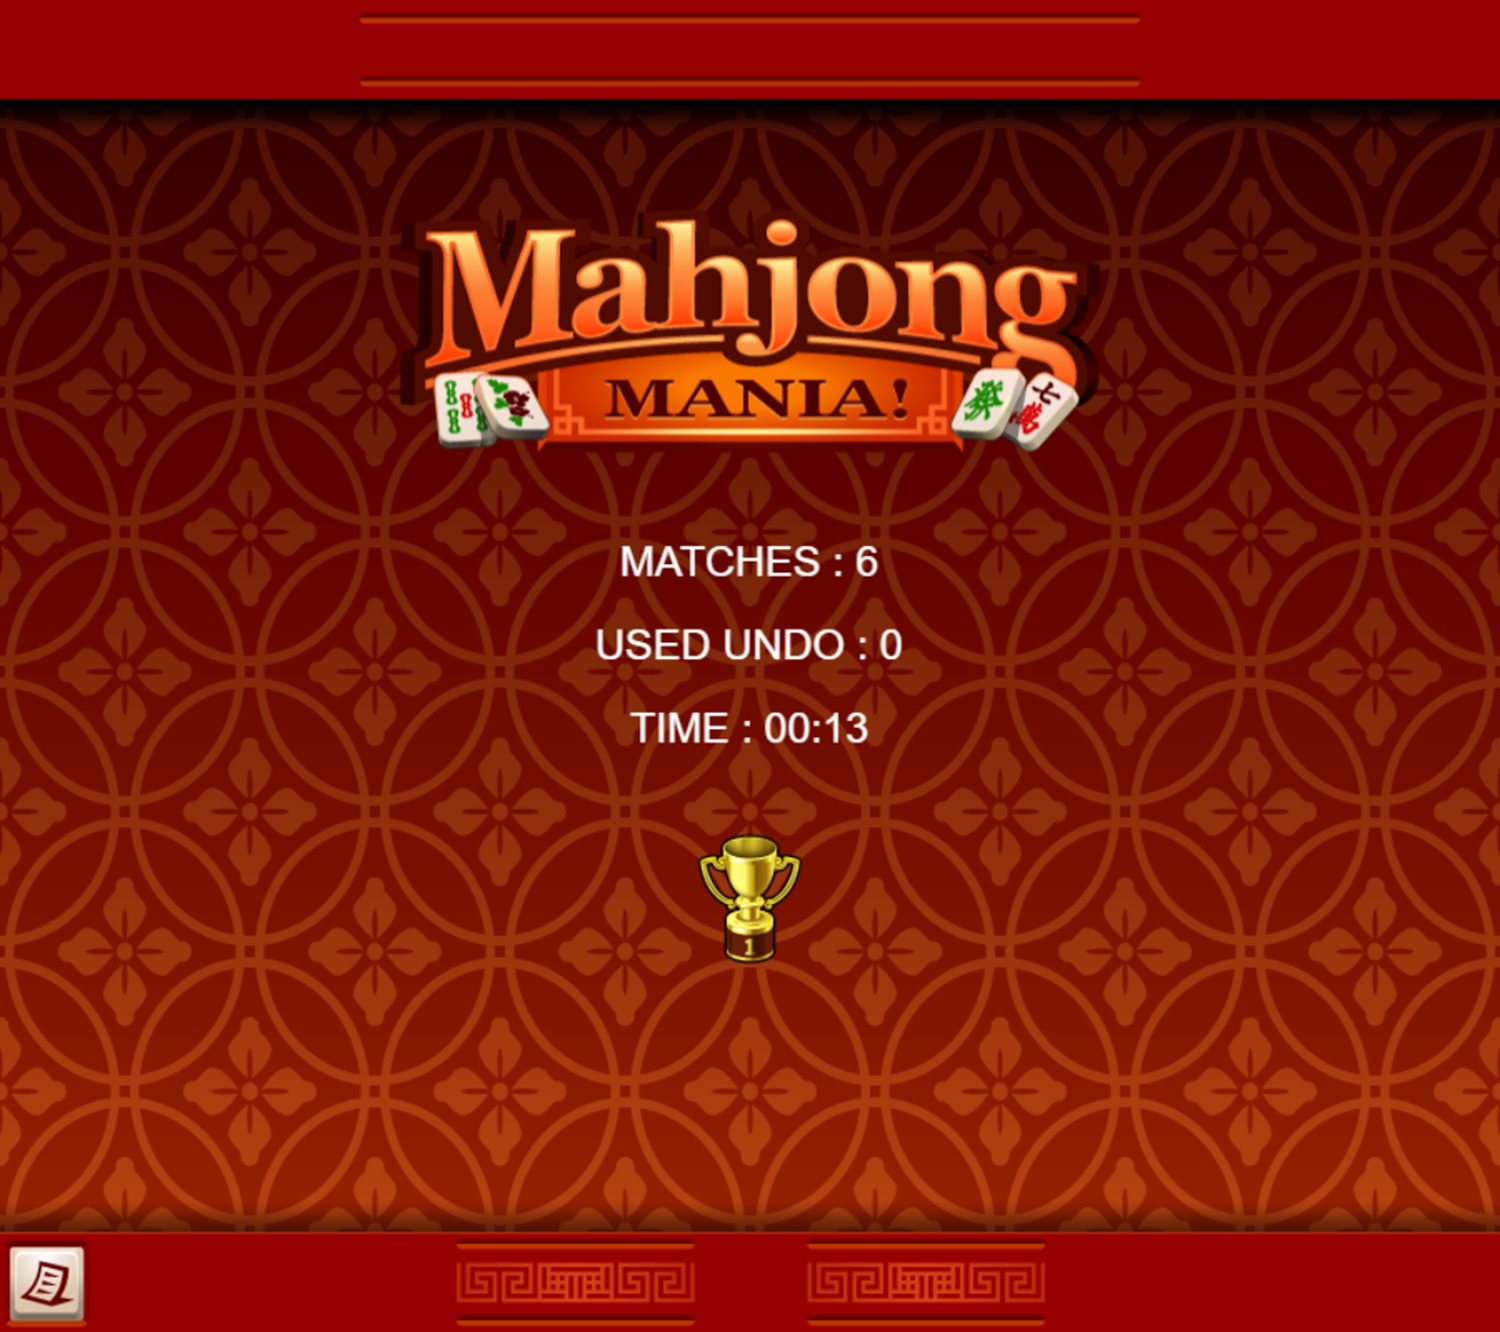 Mahjong Mania Game Level Complete Screenshot.